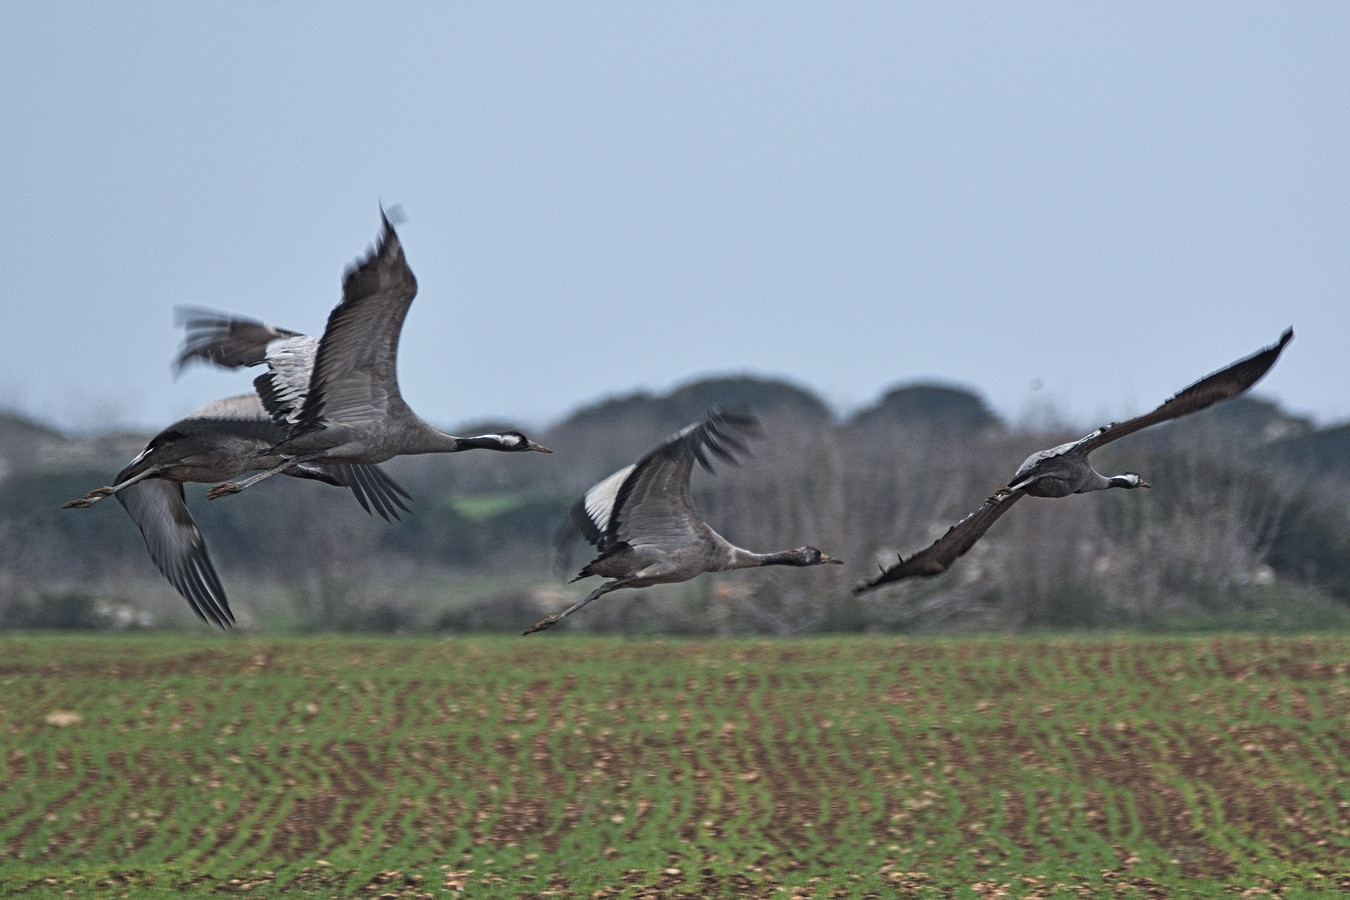 cranes in flight...